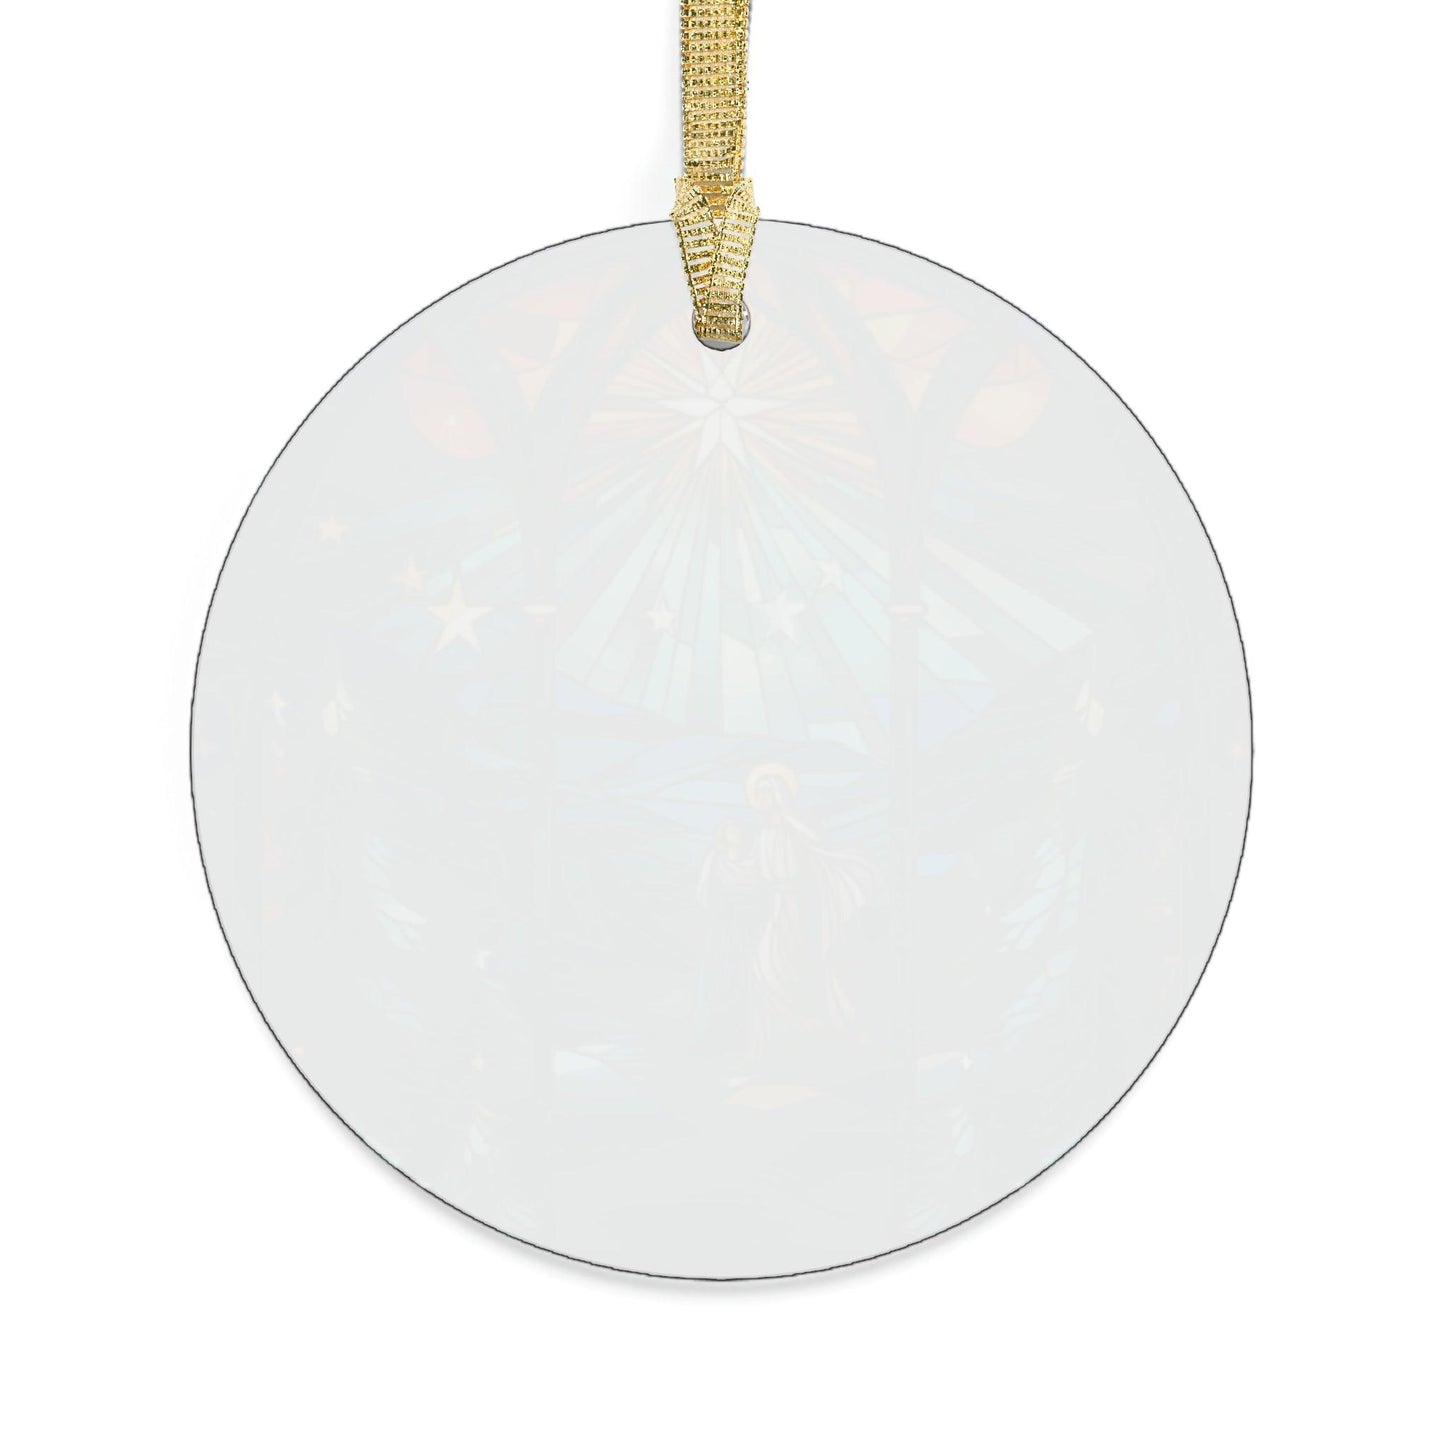 Guiding Light -A Mother's Embrace Beneath the Celestial Canopy Christian Acrylic Ornaments - Mallard Moon Gift Shop